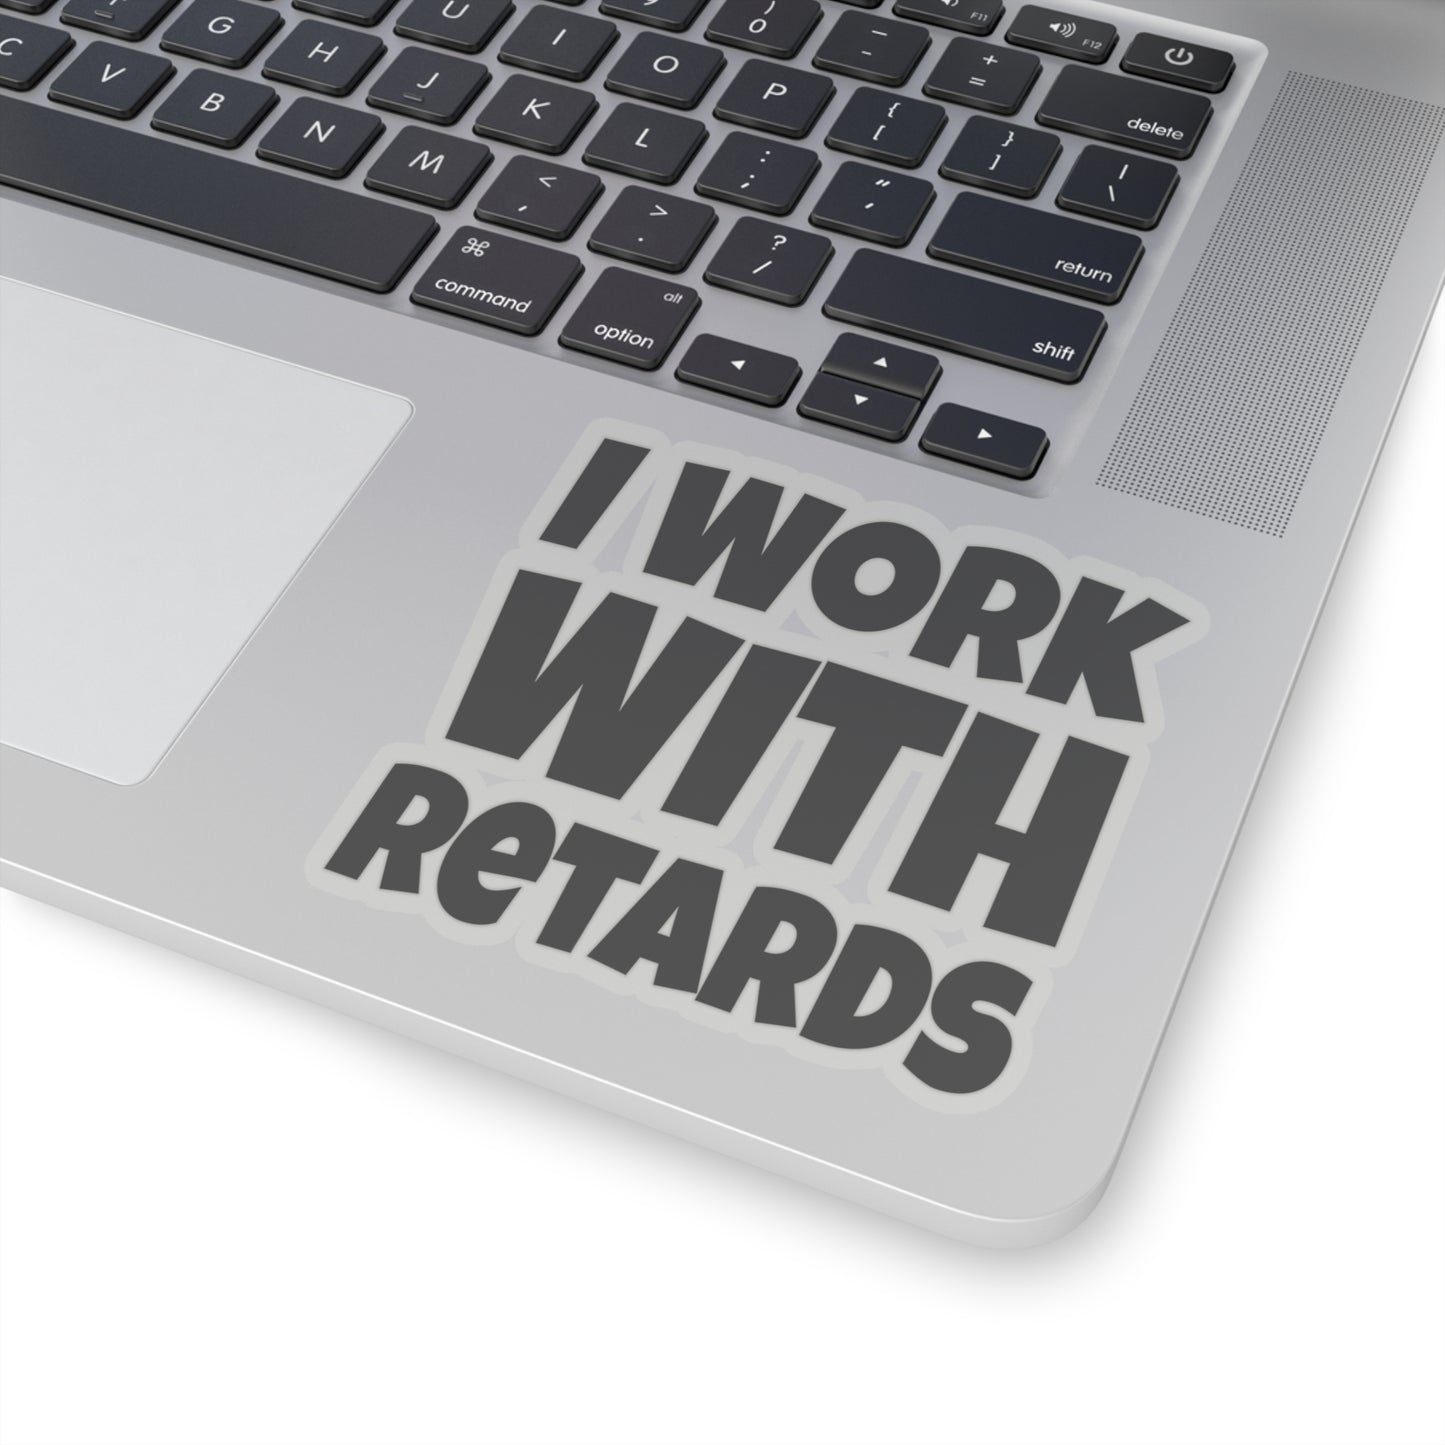 I Work with Retards - Kiss-Cut Stickers